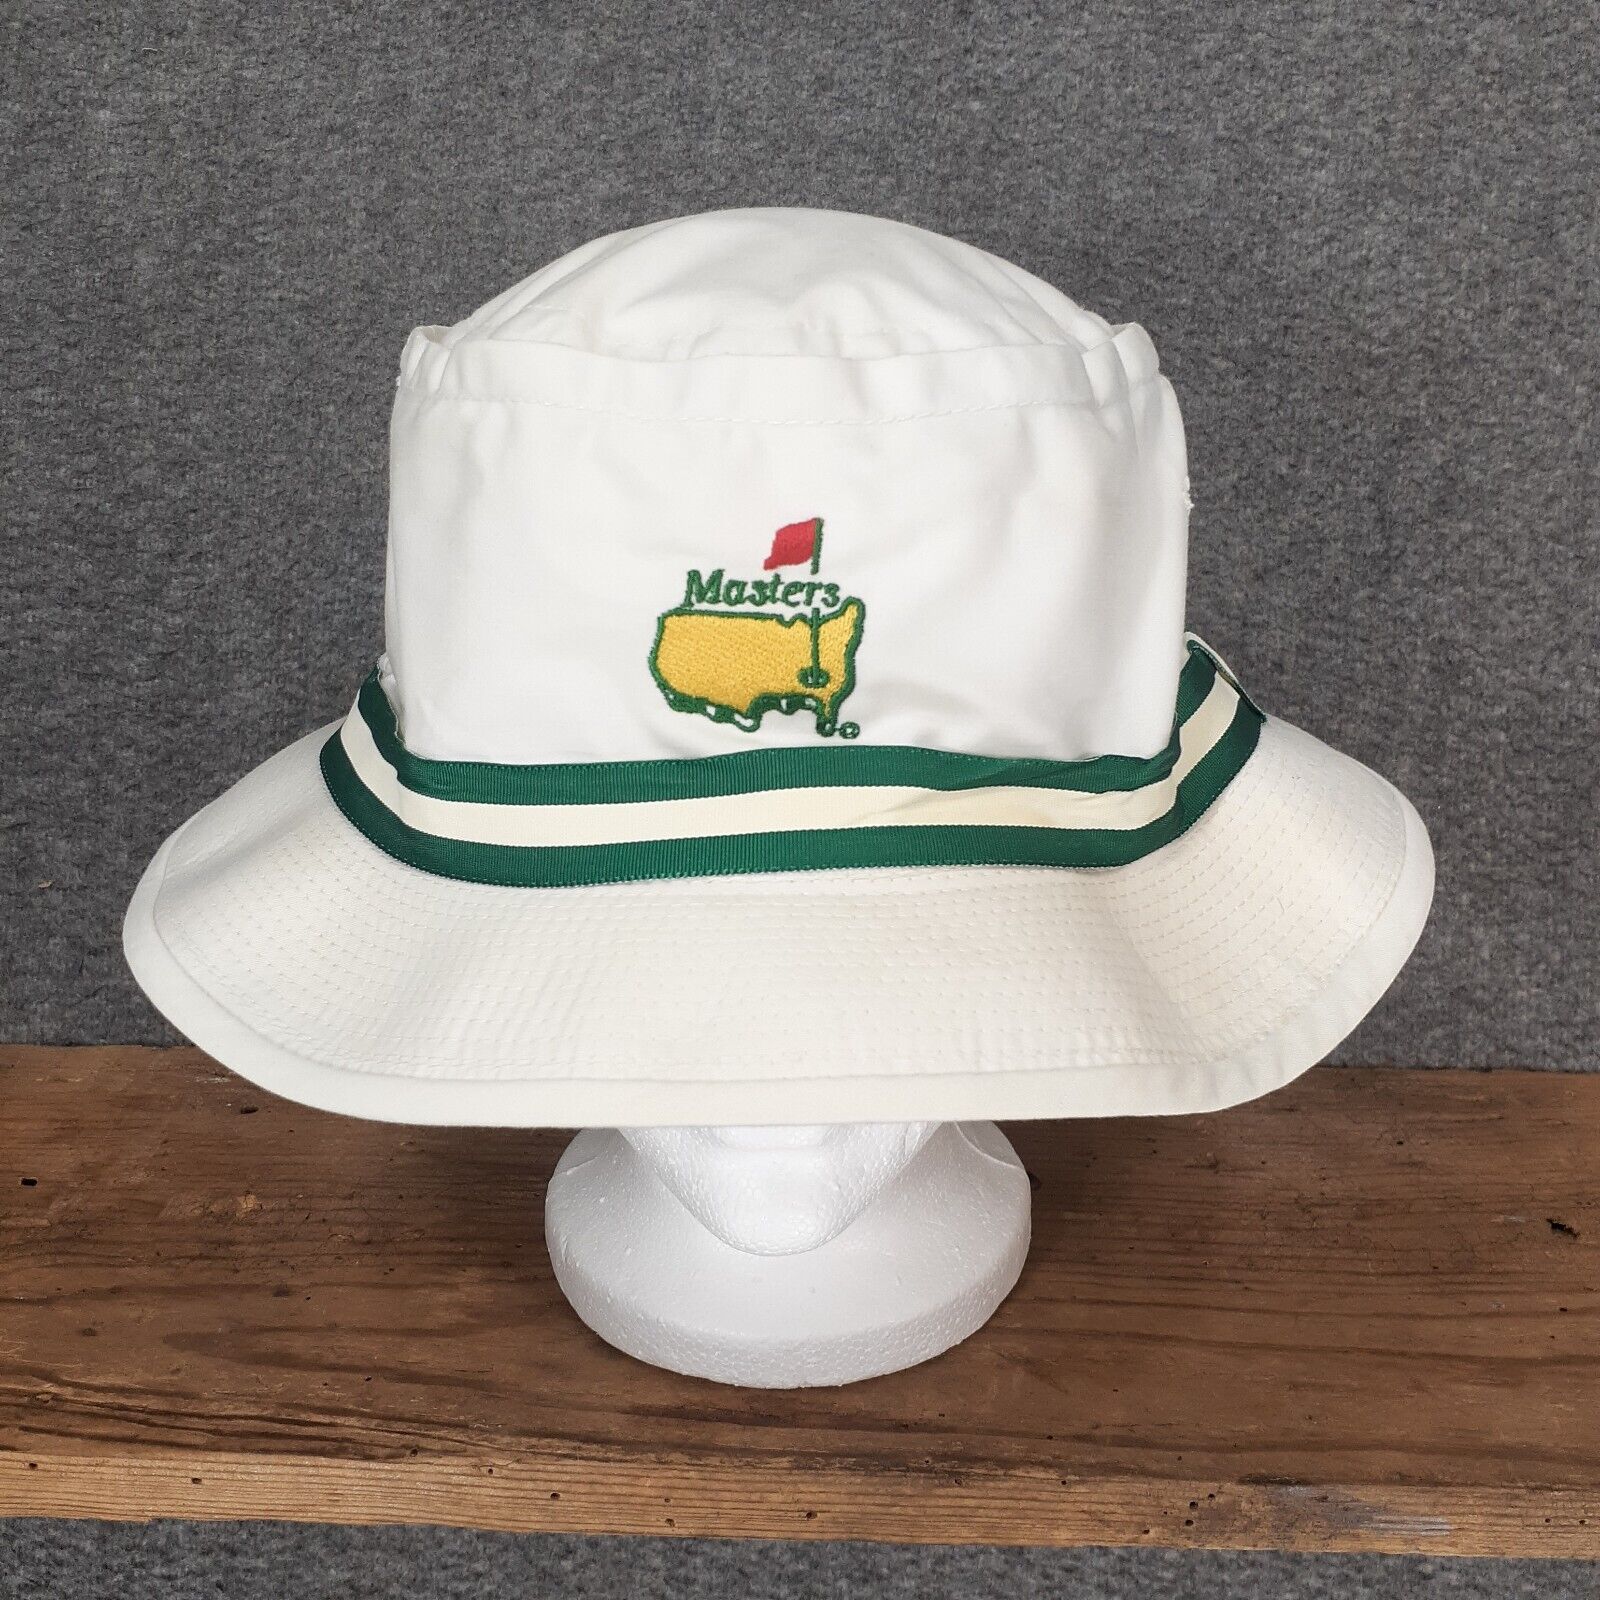 Vintage Masters Bucket Hat Size XL White Derby Cap Golf Augusta made in the USA